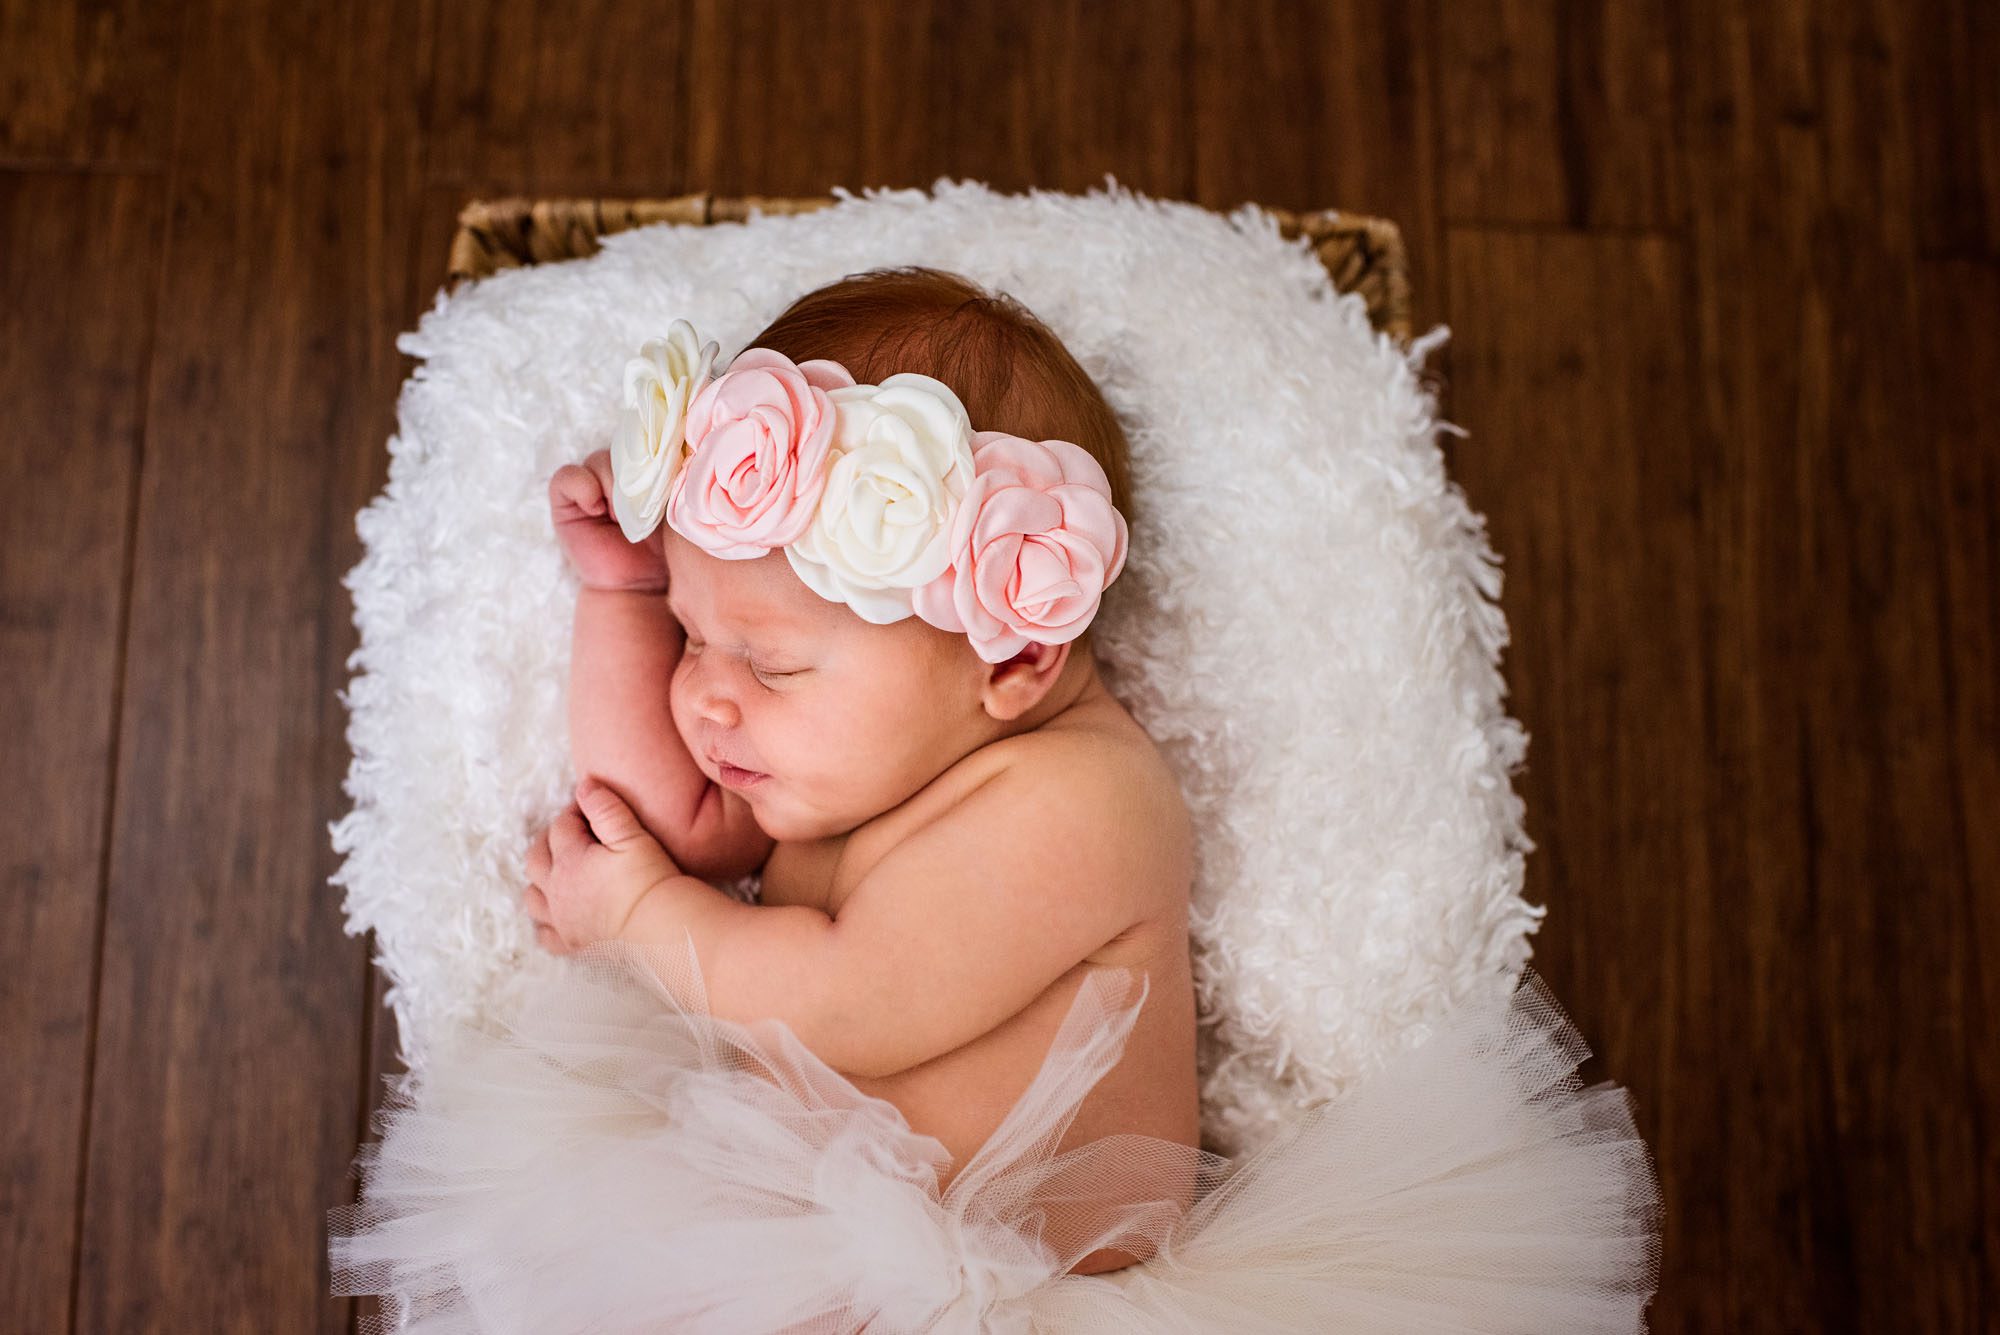 Newborn baby sleeping in basket with flower headband, San Antonio Newborn Photographer